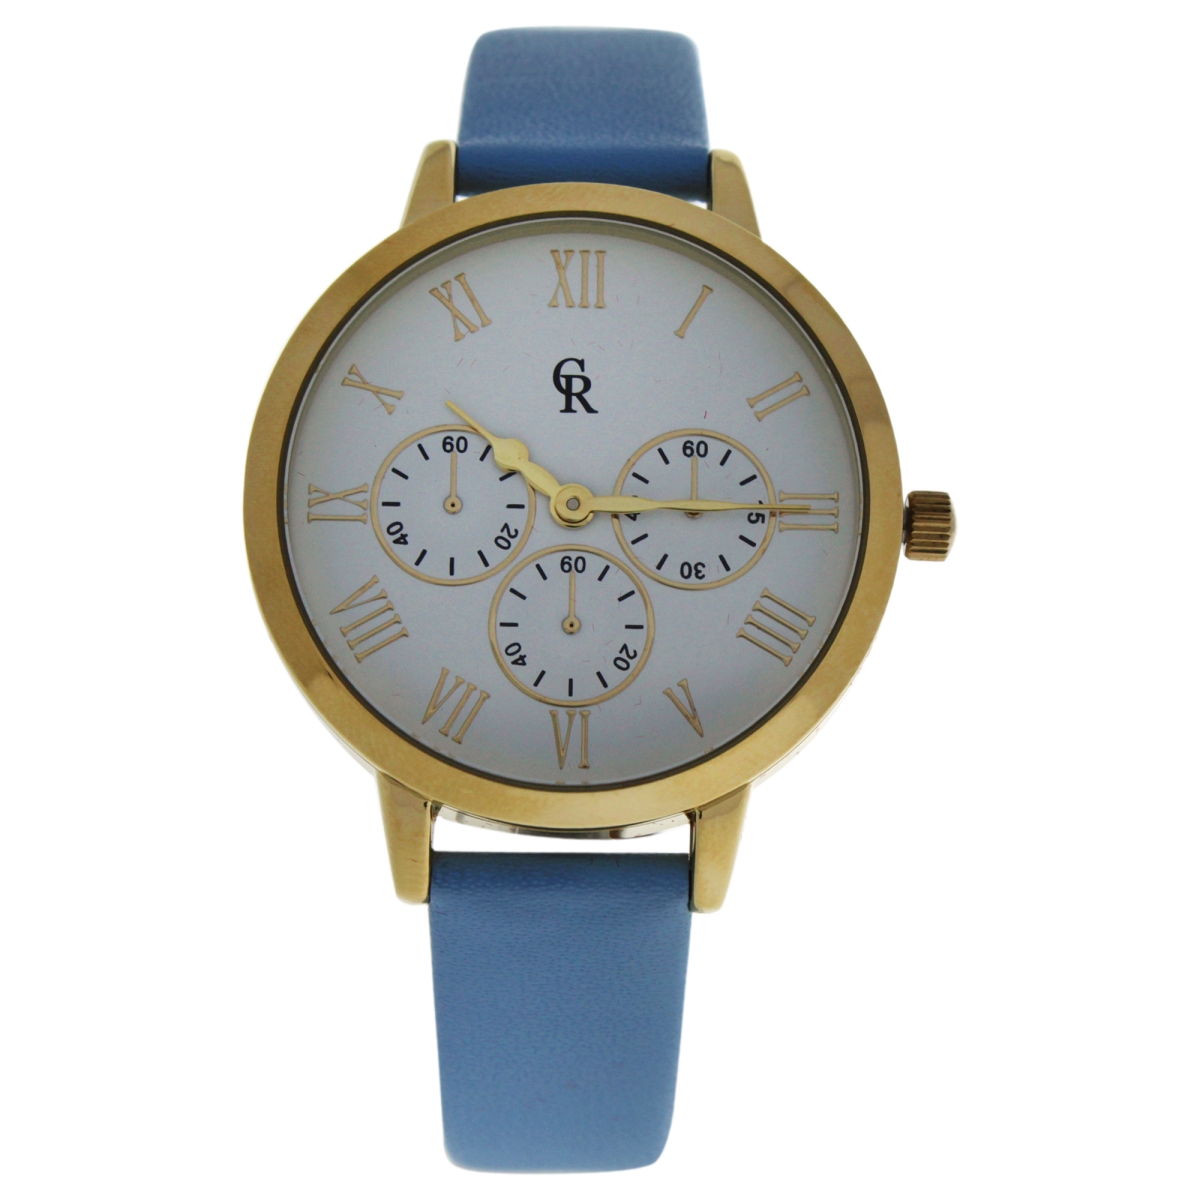 W-wat-1512 La Basic - Gold & Light Blue Leather Strap Watch For Women - Crb011